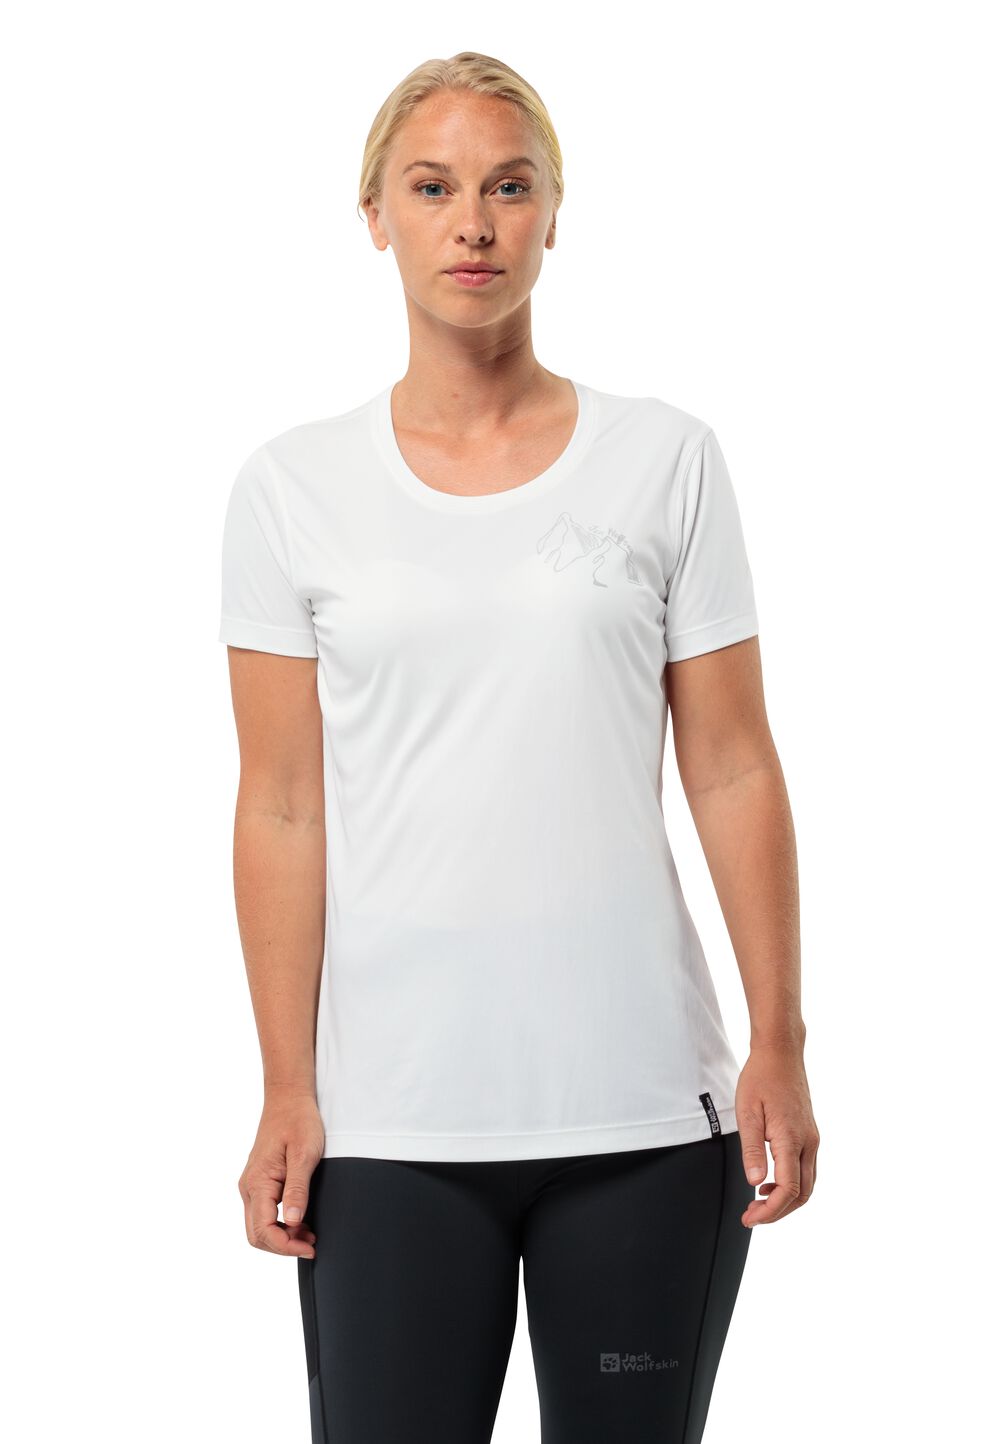 Jack Wolfskin Peak Graphic T-Shirt Women Functioneel shirt Dames M wit stark white